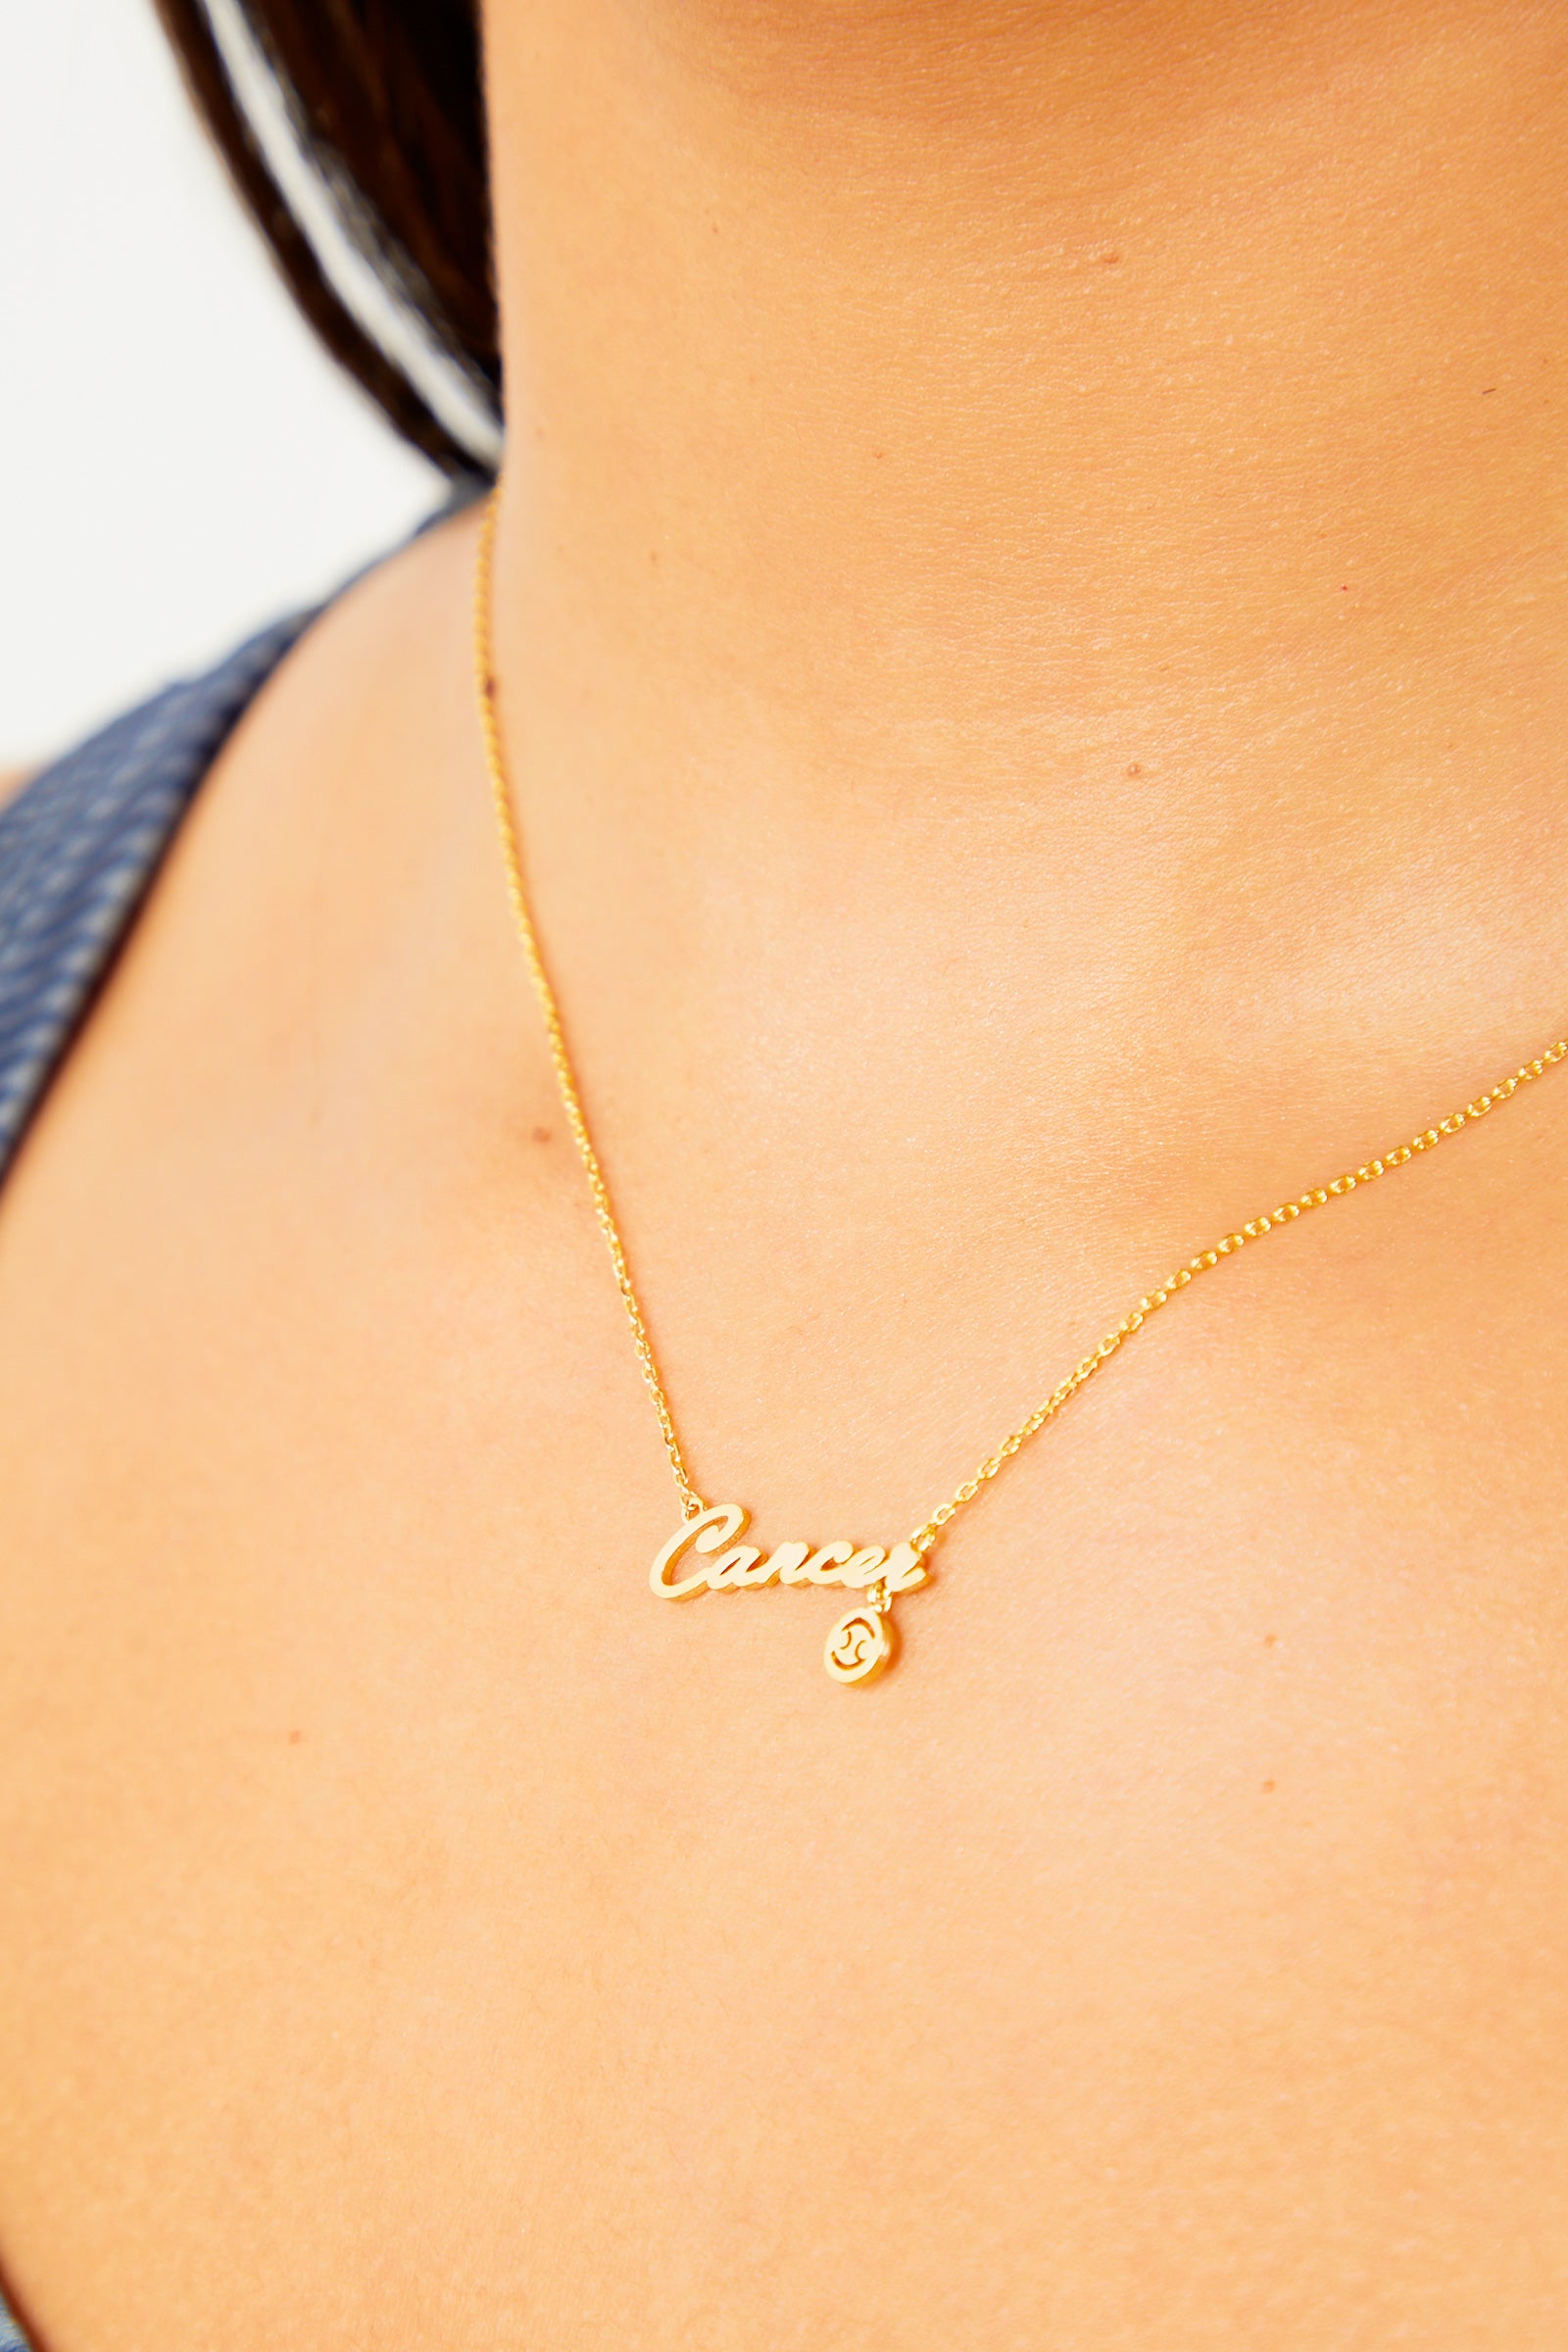 Cancer Nameplate Necklace - Gold